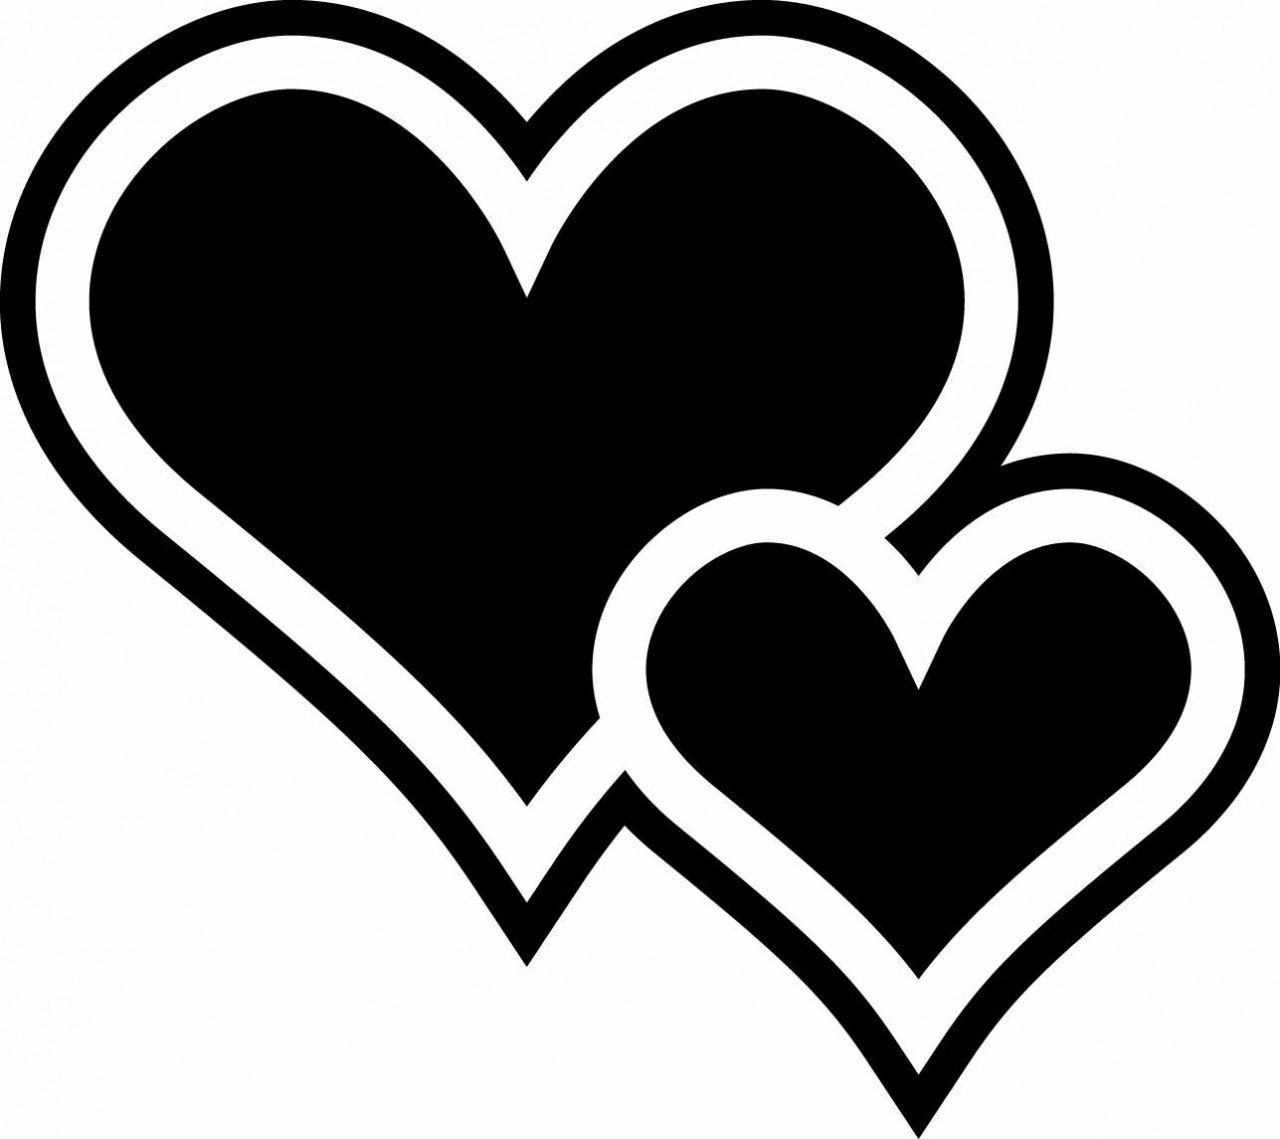 Free Chalkboard Heart Cliparts, Download Free Chalkboard Heart Cliparts